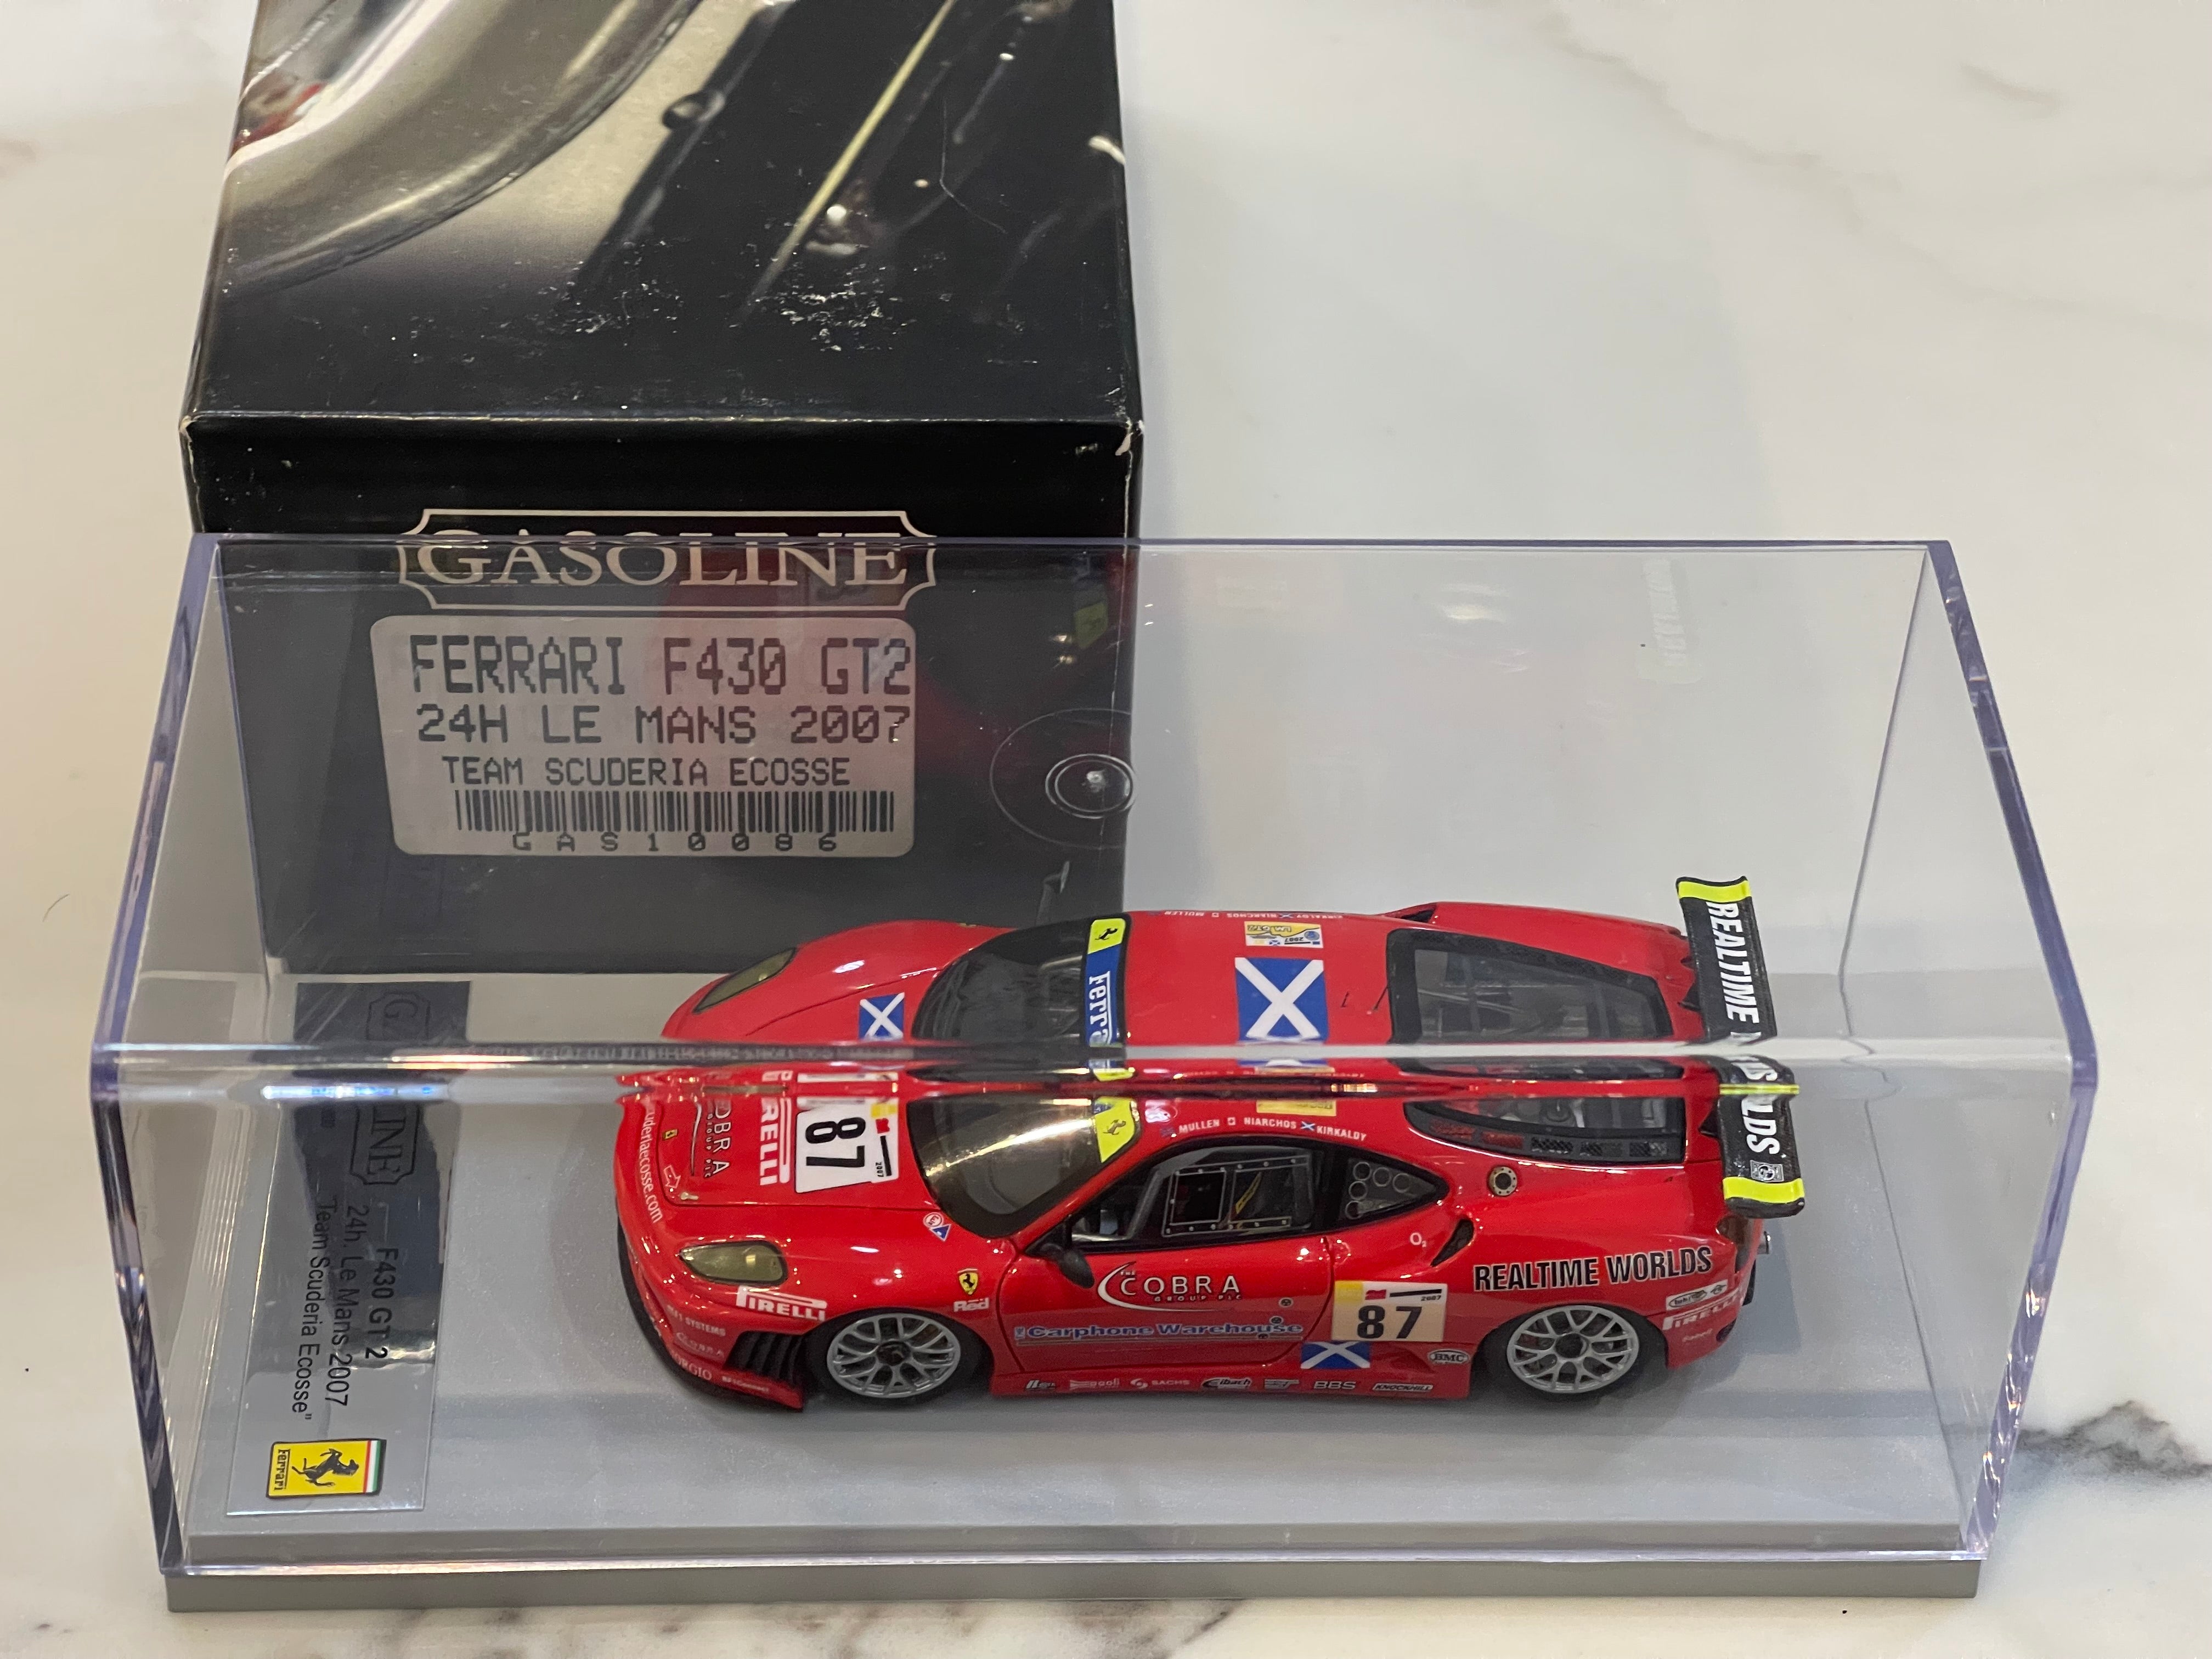 Gasoline 1/43 Ferrari F430 GT2 24 Hours Le Mans 2007 Red No. 87 GAS10086